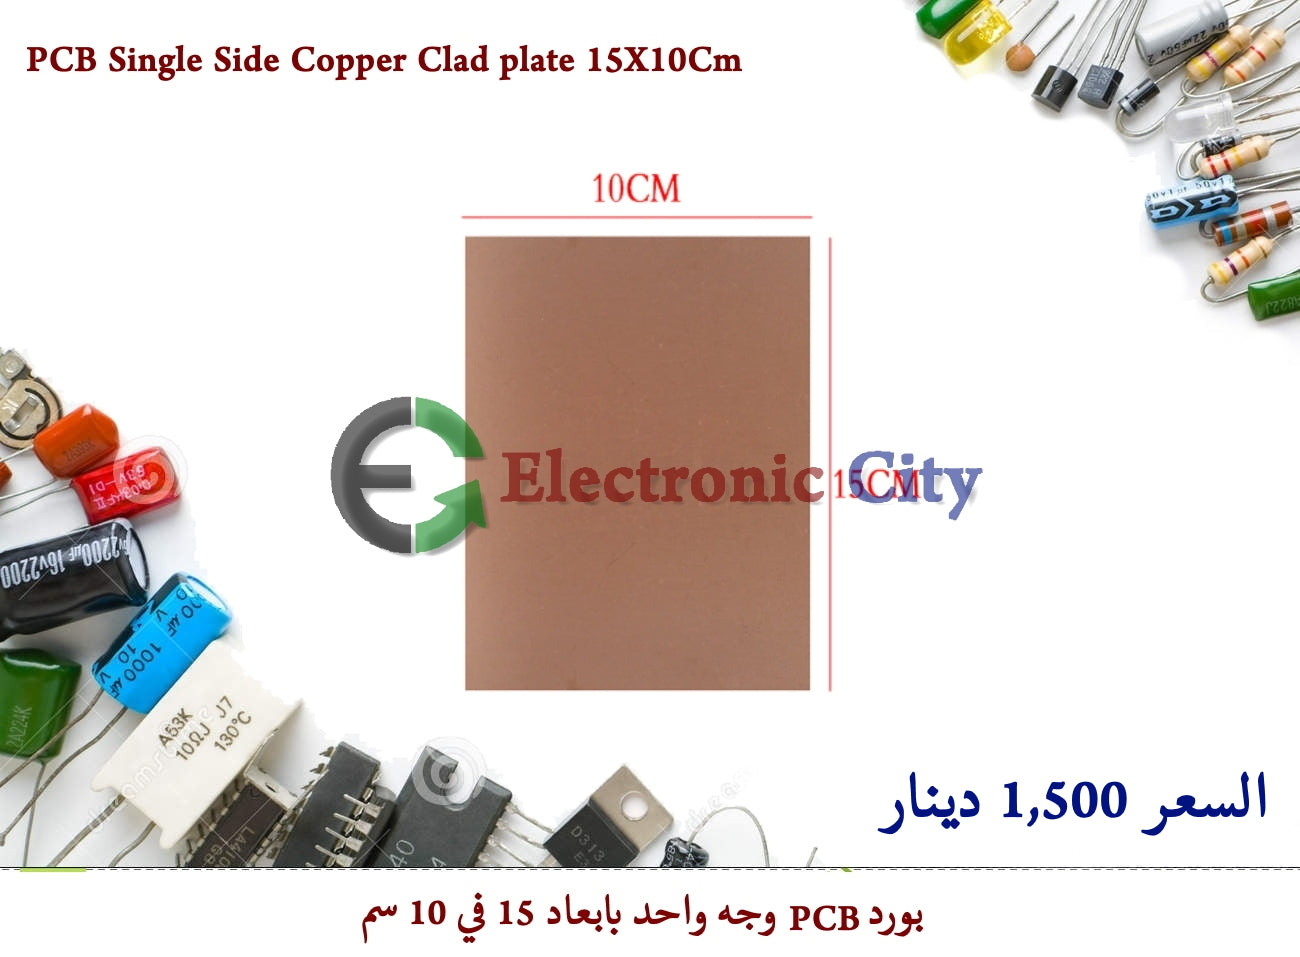 PCB Double Side Copper Clad plate 15X10Cm 050531